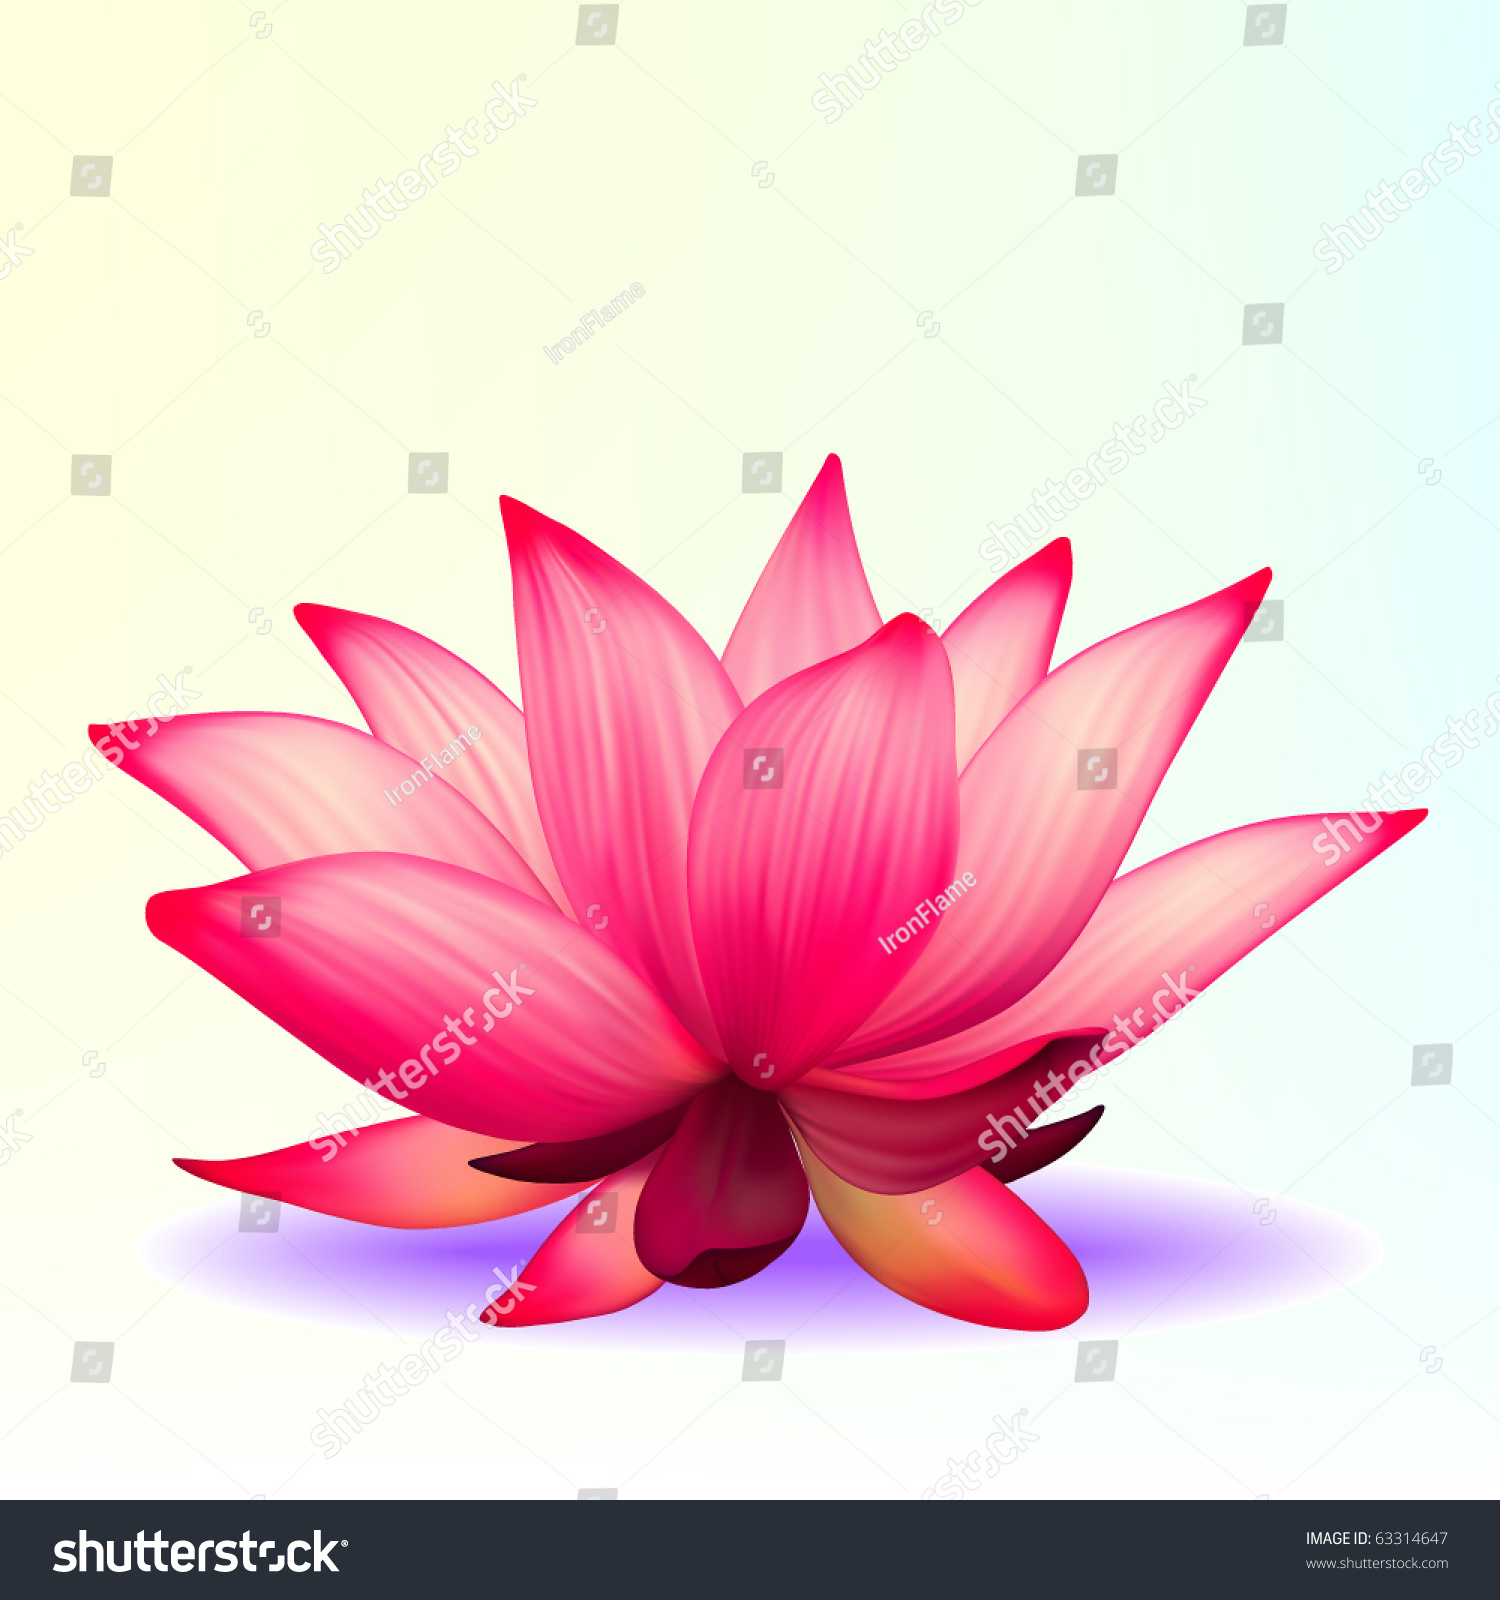 Vector Photorealistic Lotus Flower Stock Vector 63314647 - Shutterstock